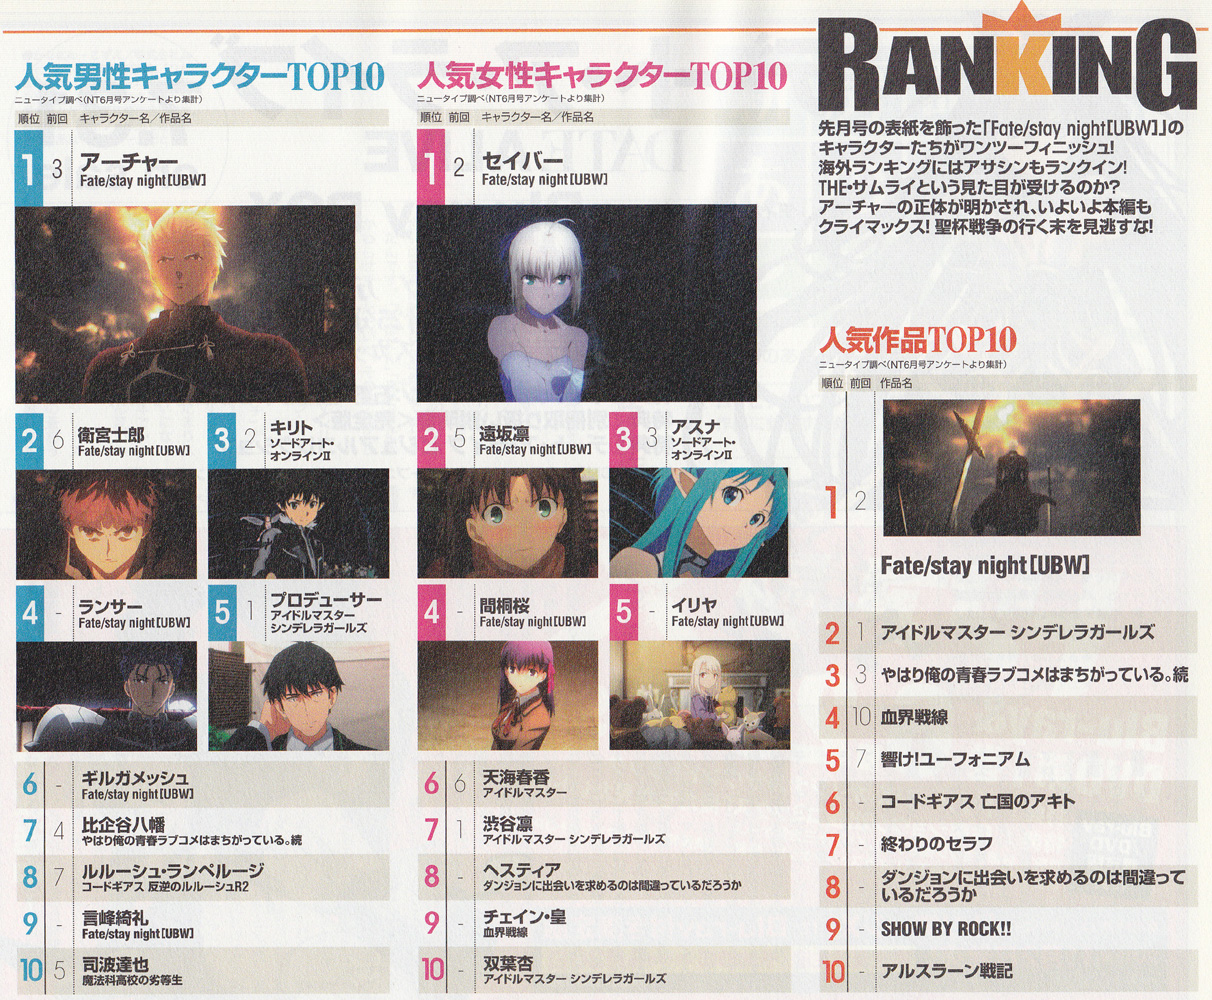 Top 10 anime personer ifølge NewType juli 2015